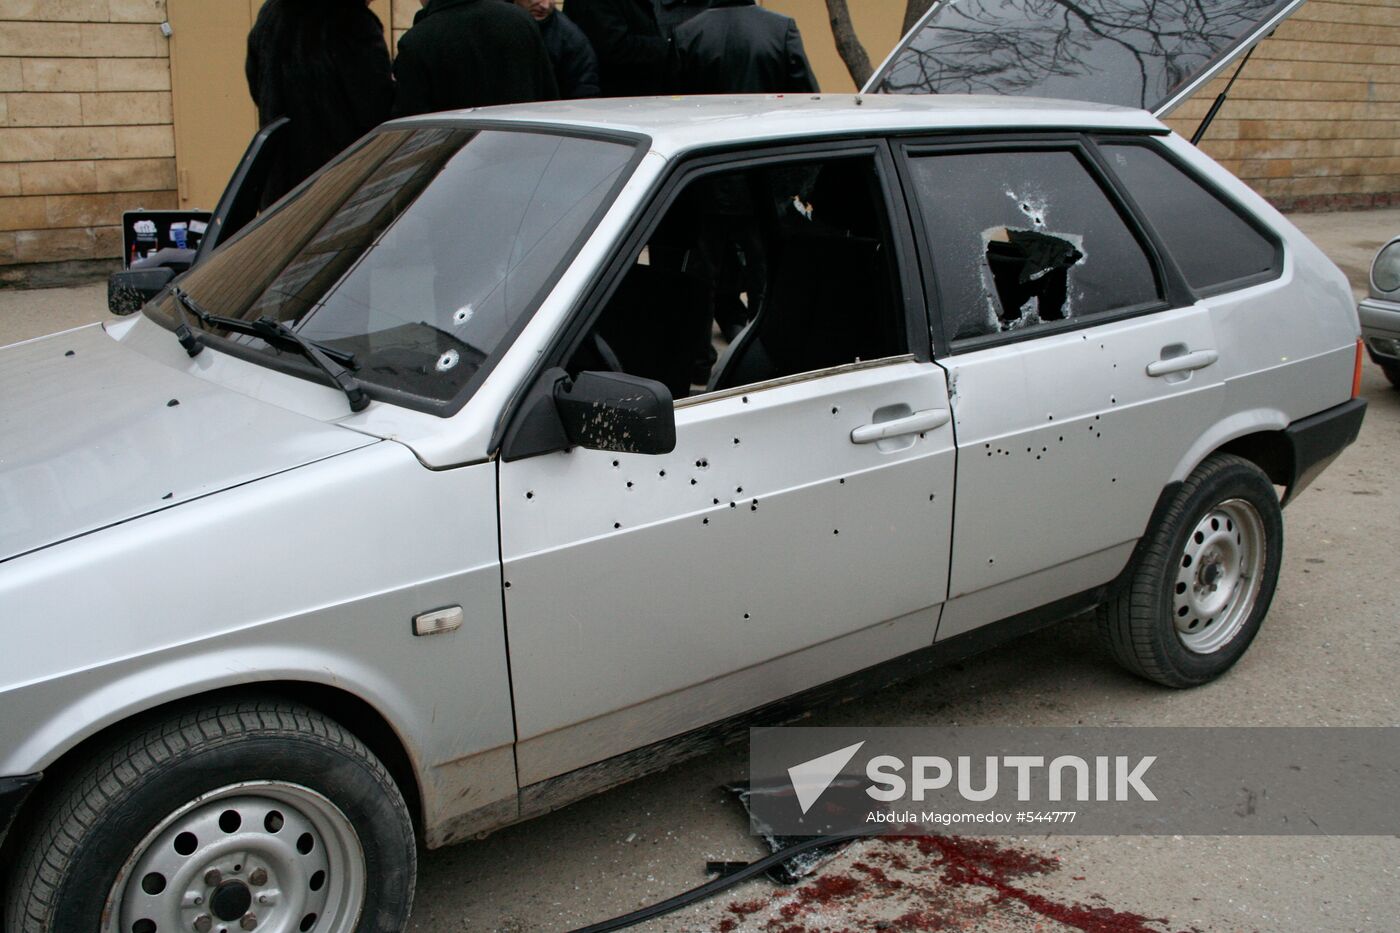 Two gunmen eliminated in Makhachkala